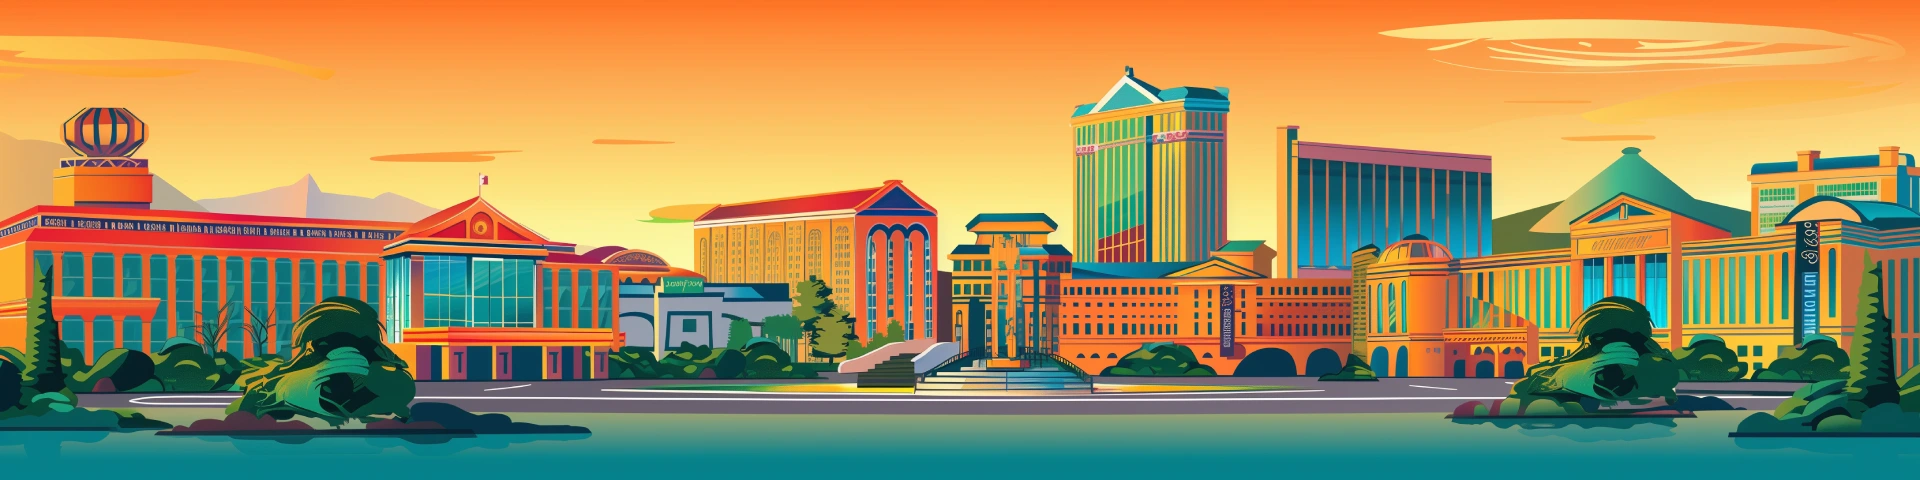 Sunny day casino city cartoon banner